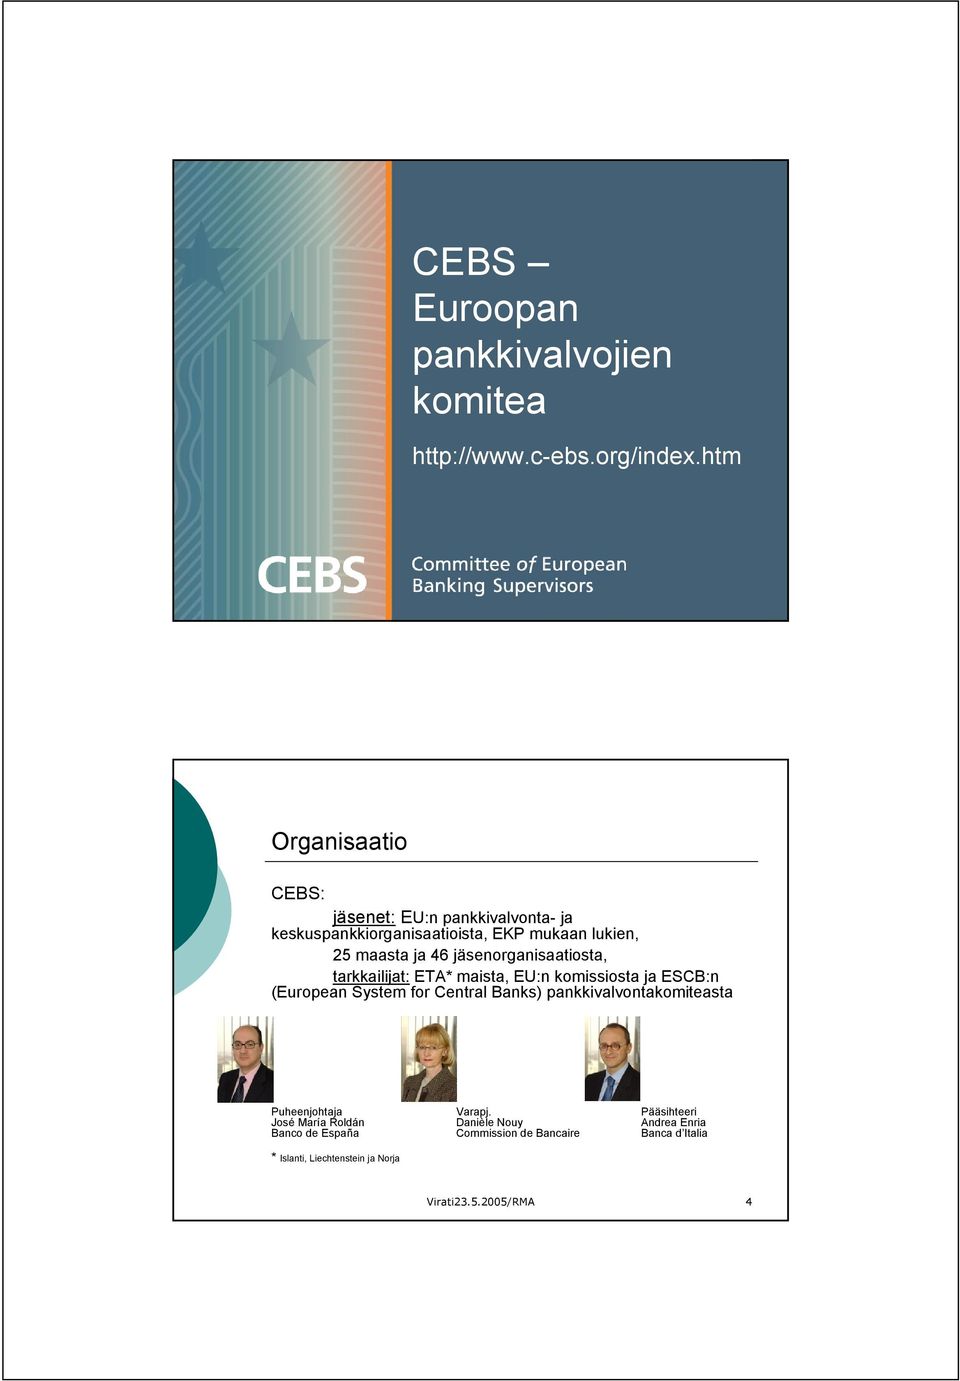 jäsenorganisaatiosta, tarkkailijat: ETA* maista, EU:n komissiosta ja ESCB:n (European System for Central Banks)